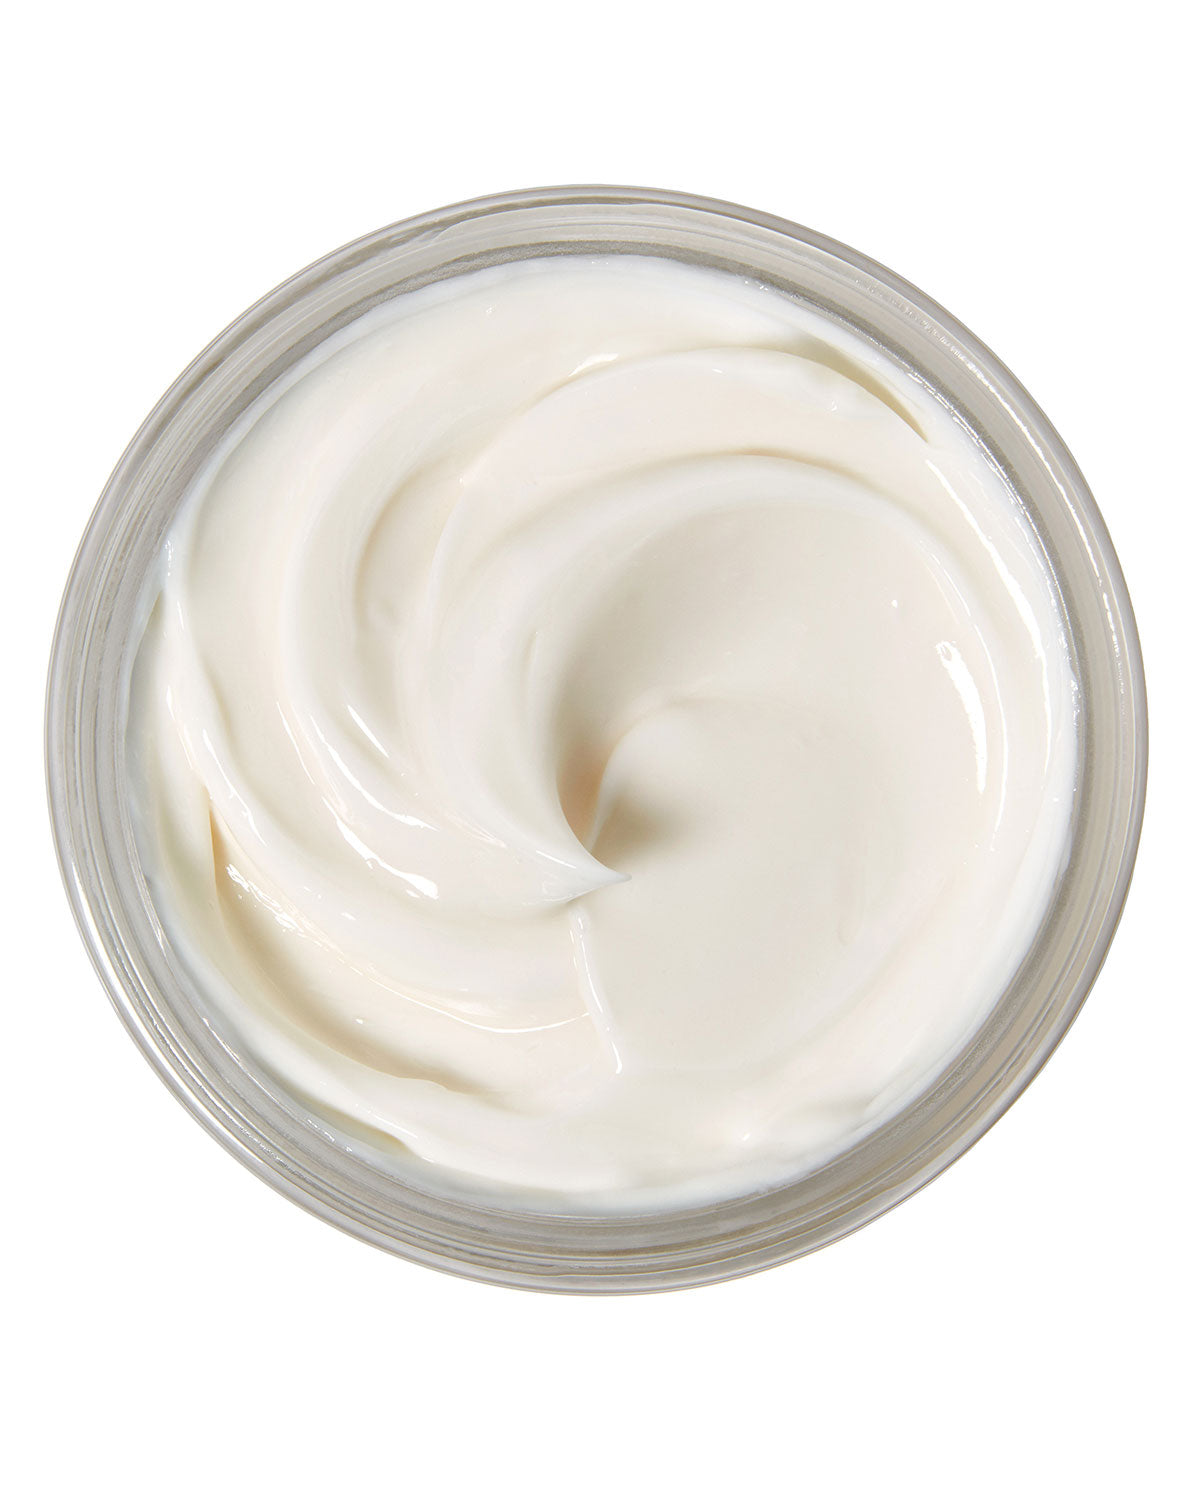 LIME BASIL & MANDARIN - Body Cream